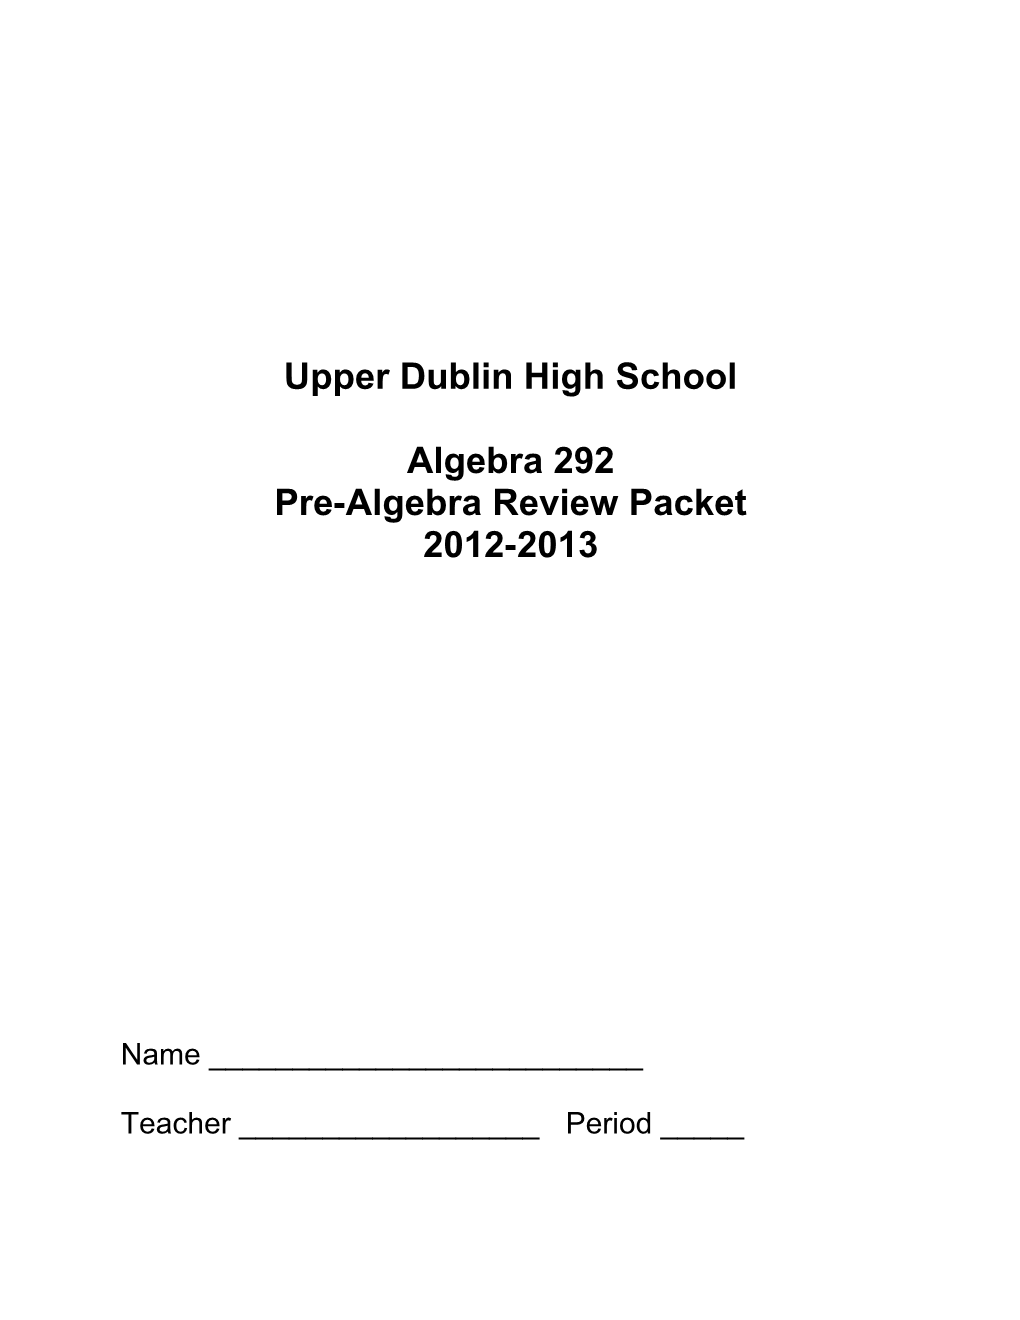 Upper Dublin High School s1